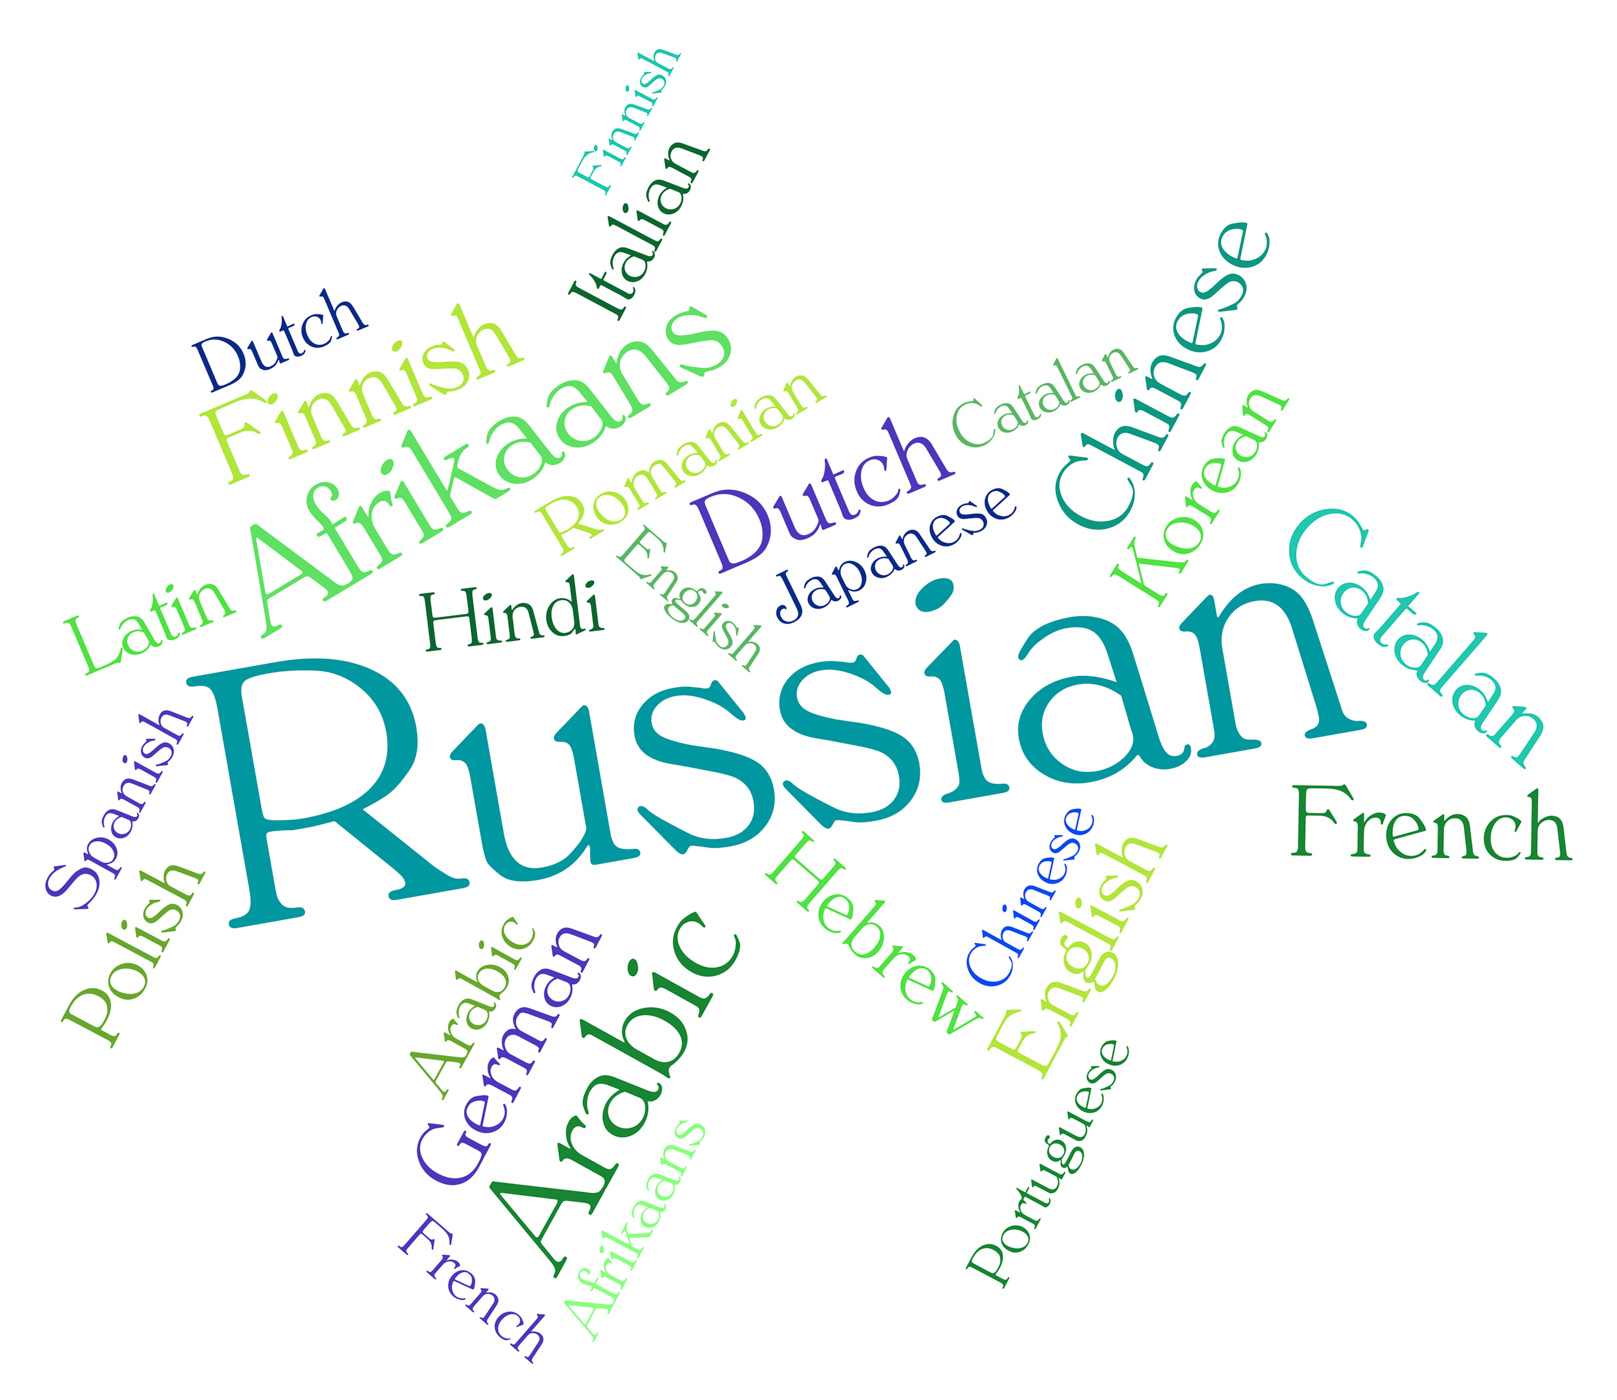 Russian language represents translator lingo and foreign photo